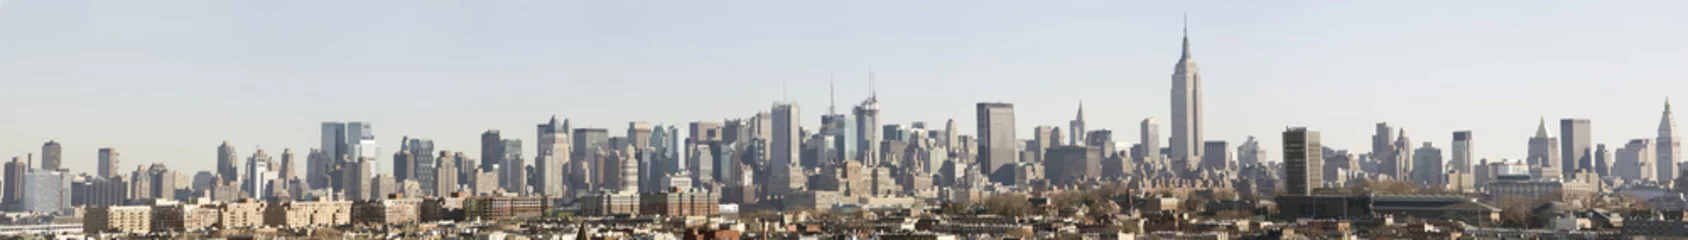 Rucksack Manhattan skyline from the Jersey City bluffs, post 9-11 © Jose Gil